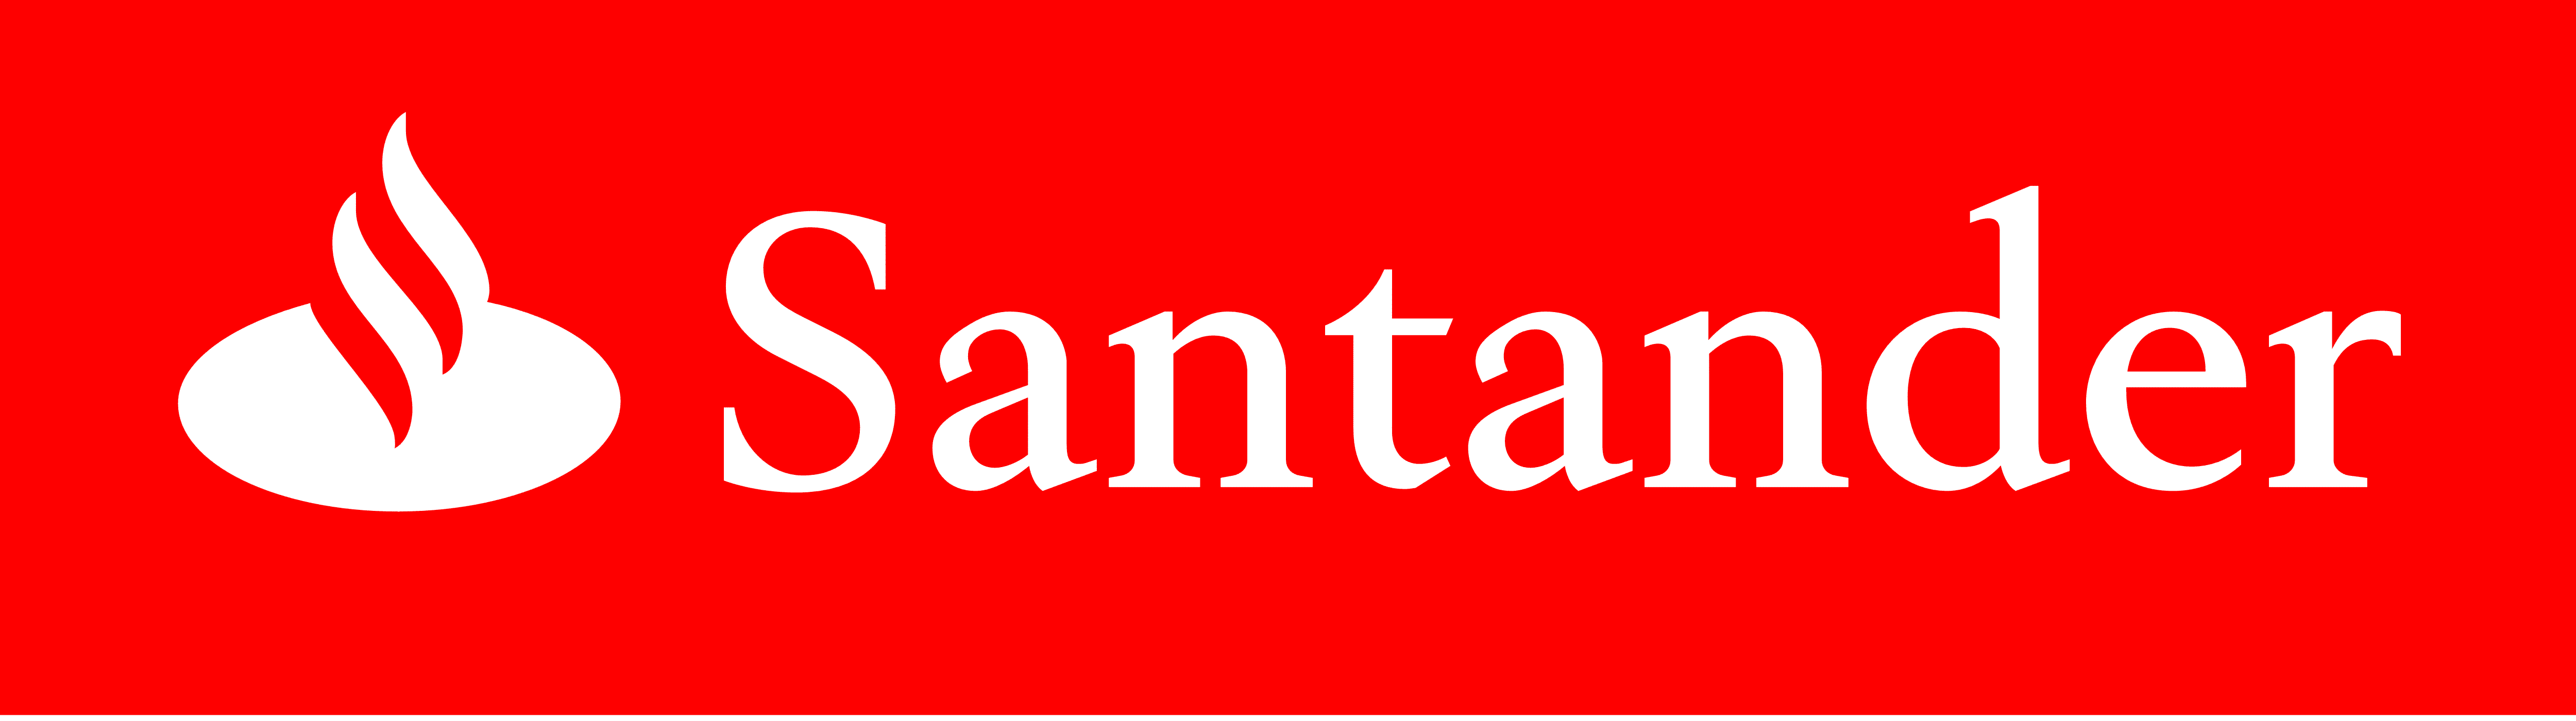 Santander_logo_logotype_emblem